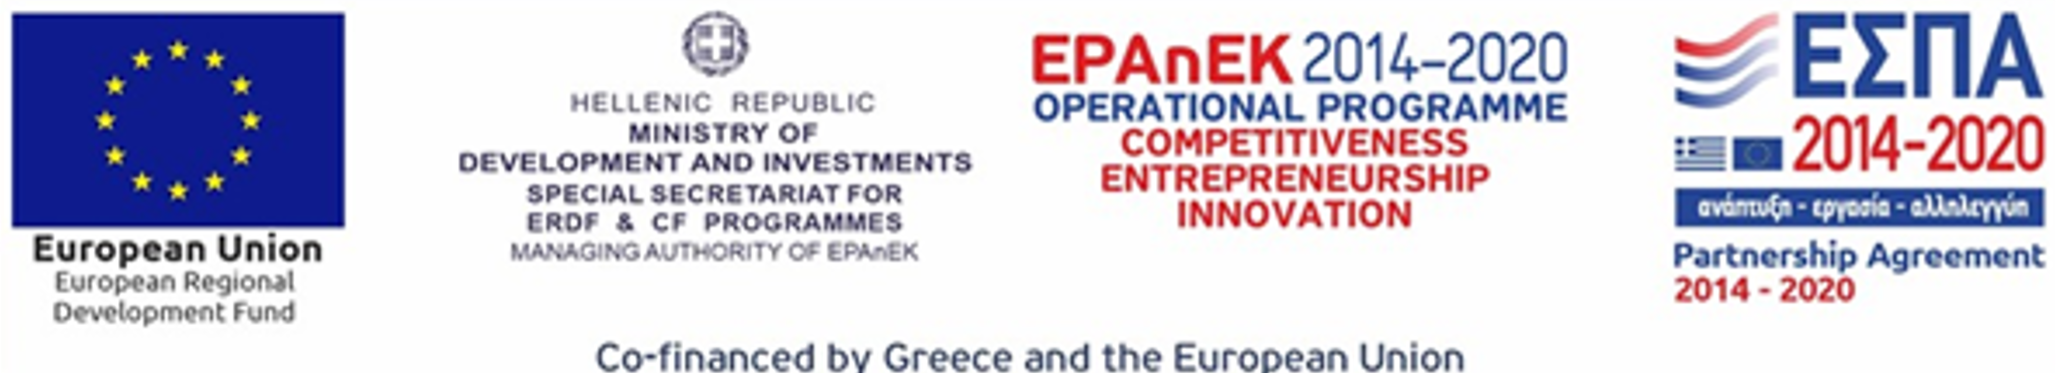 epanek logo english